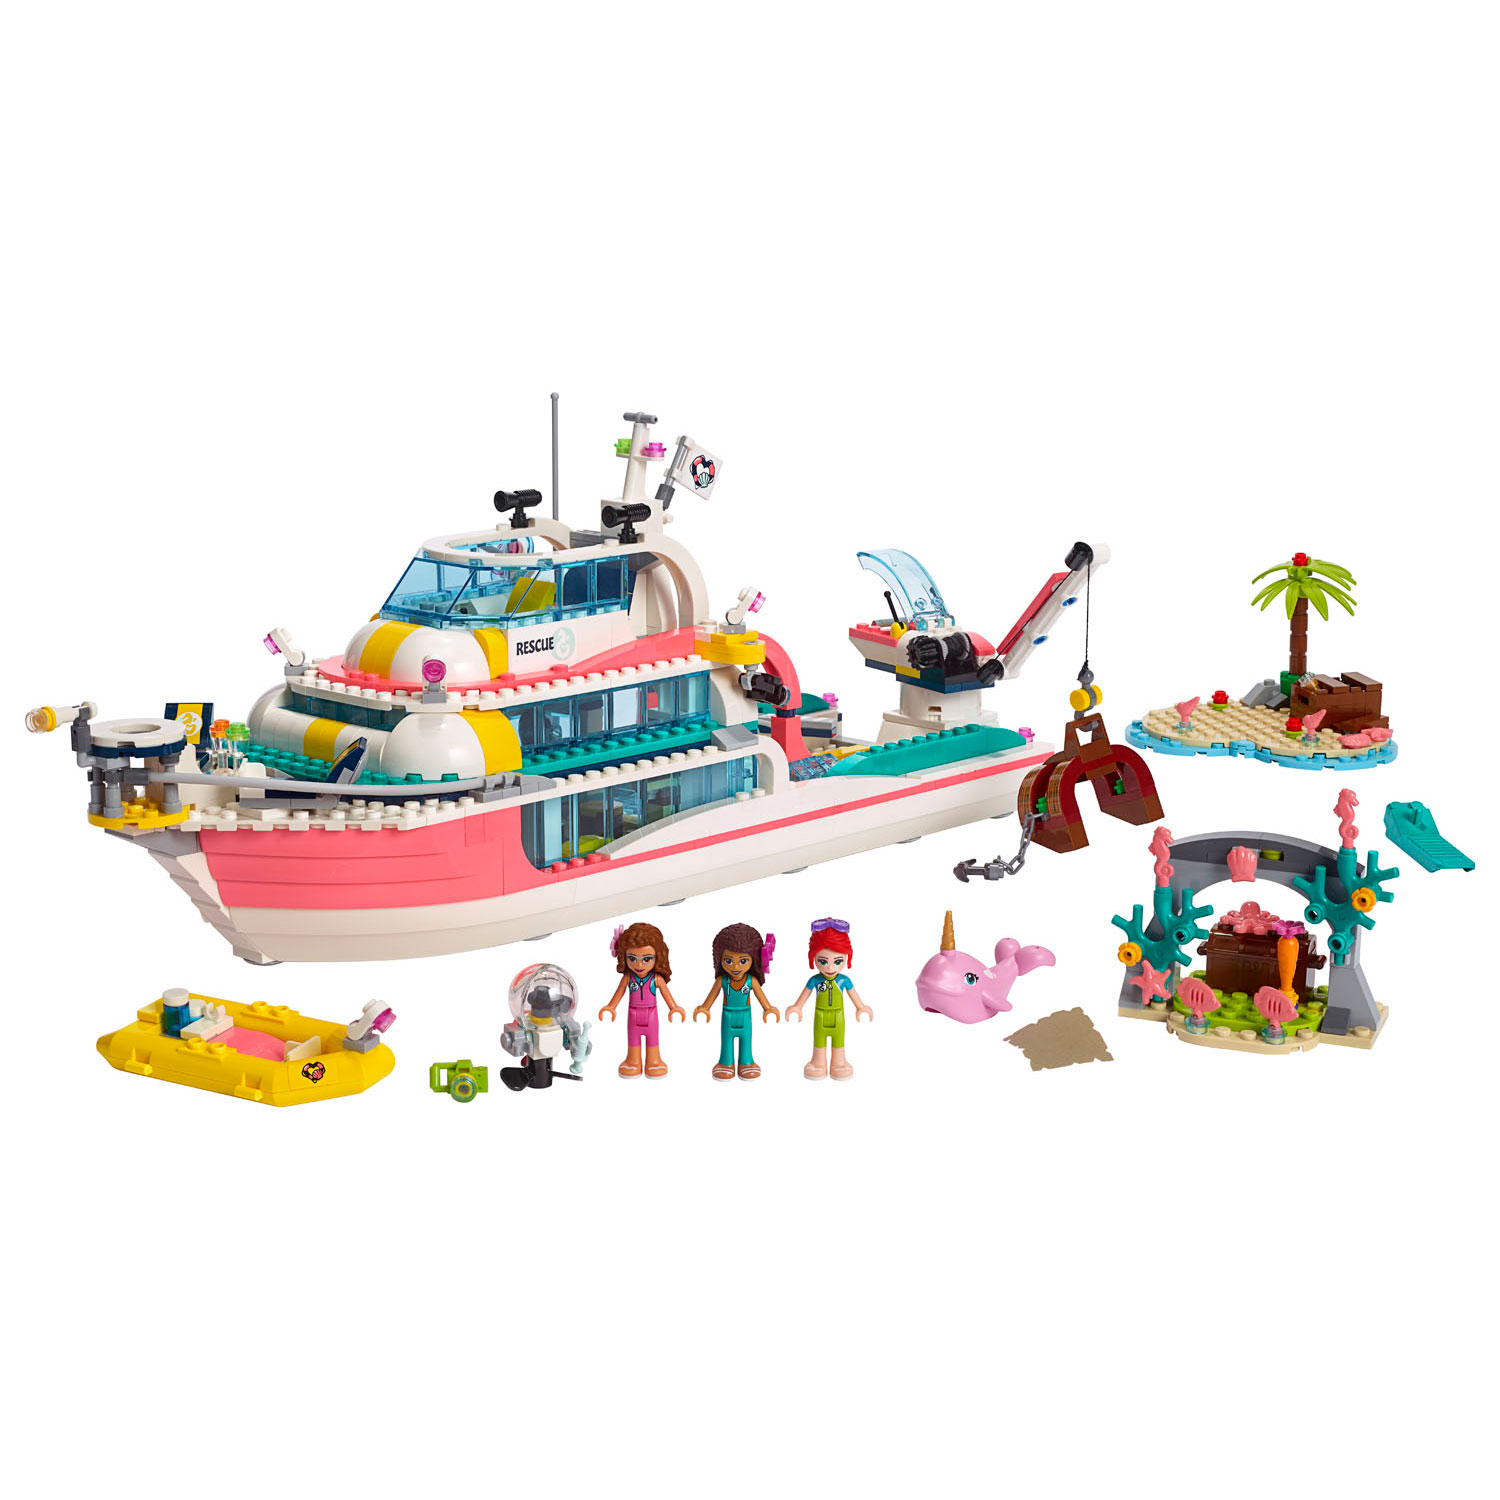 LEGO Friends 41381 Reddingsboot